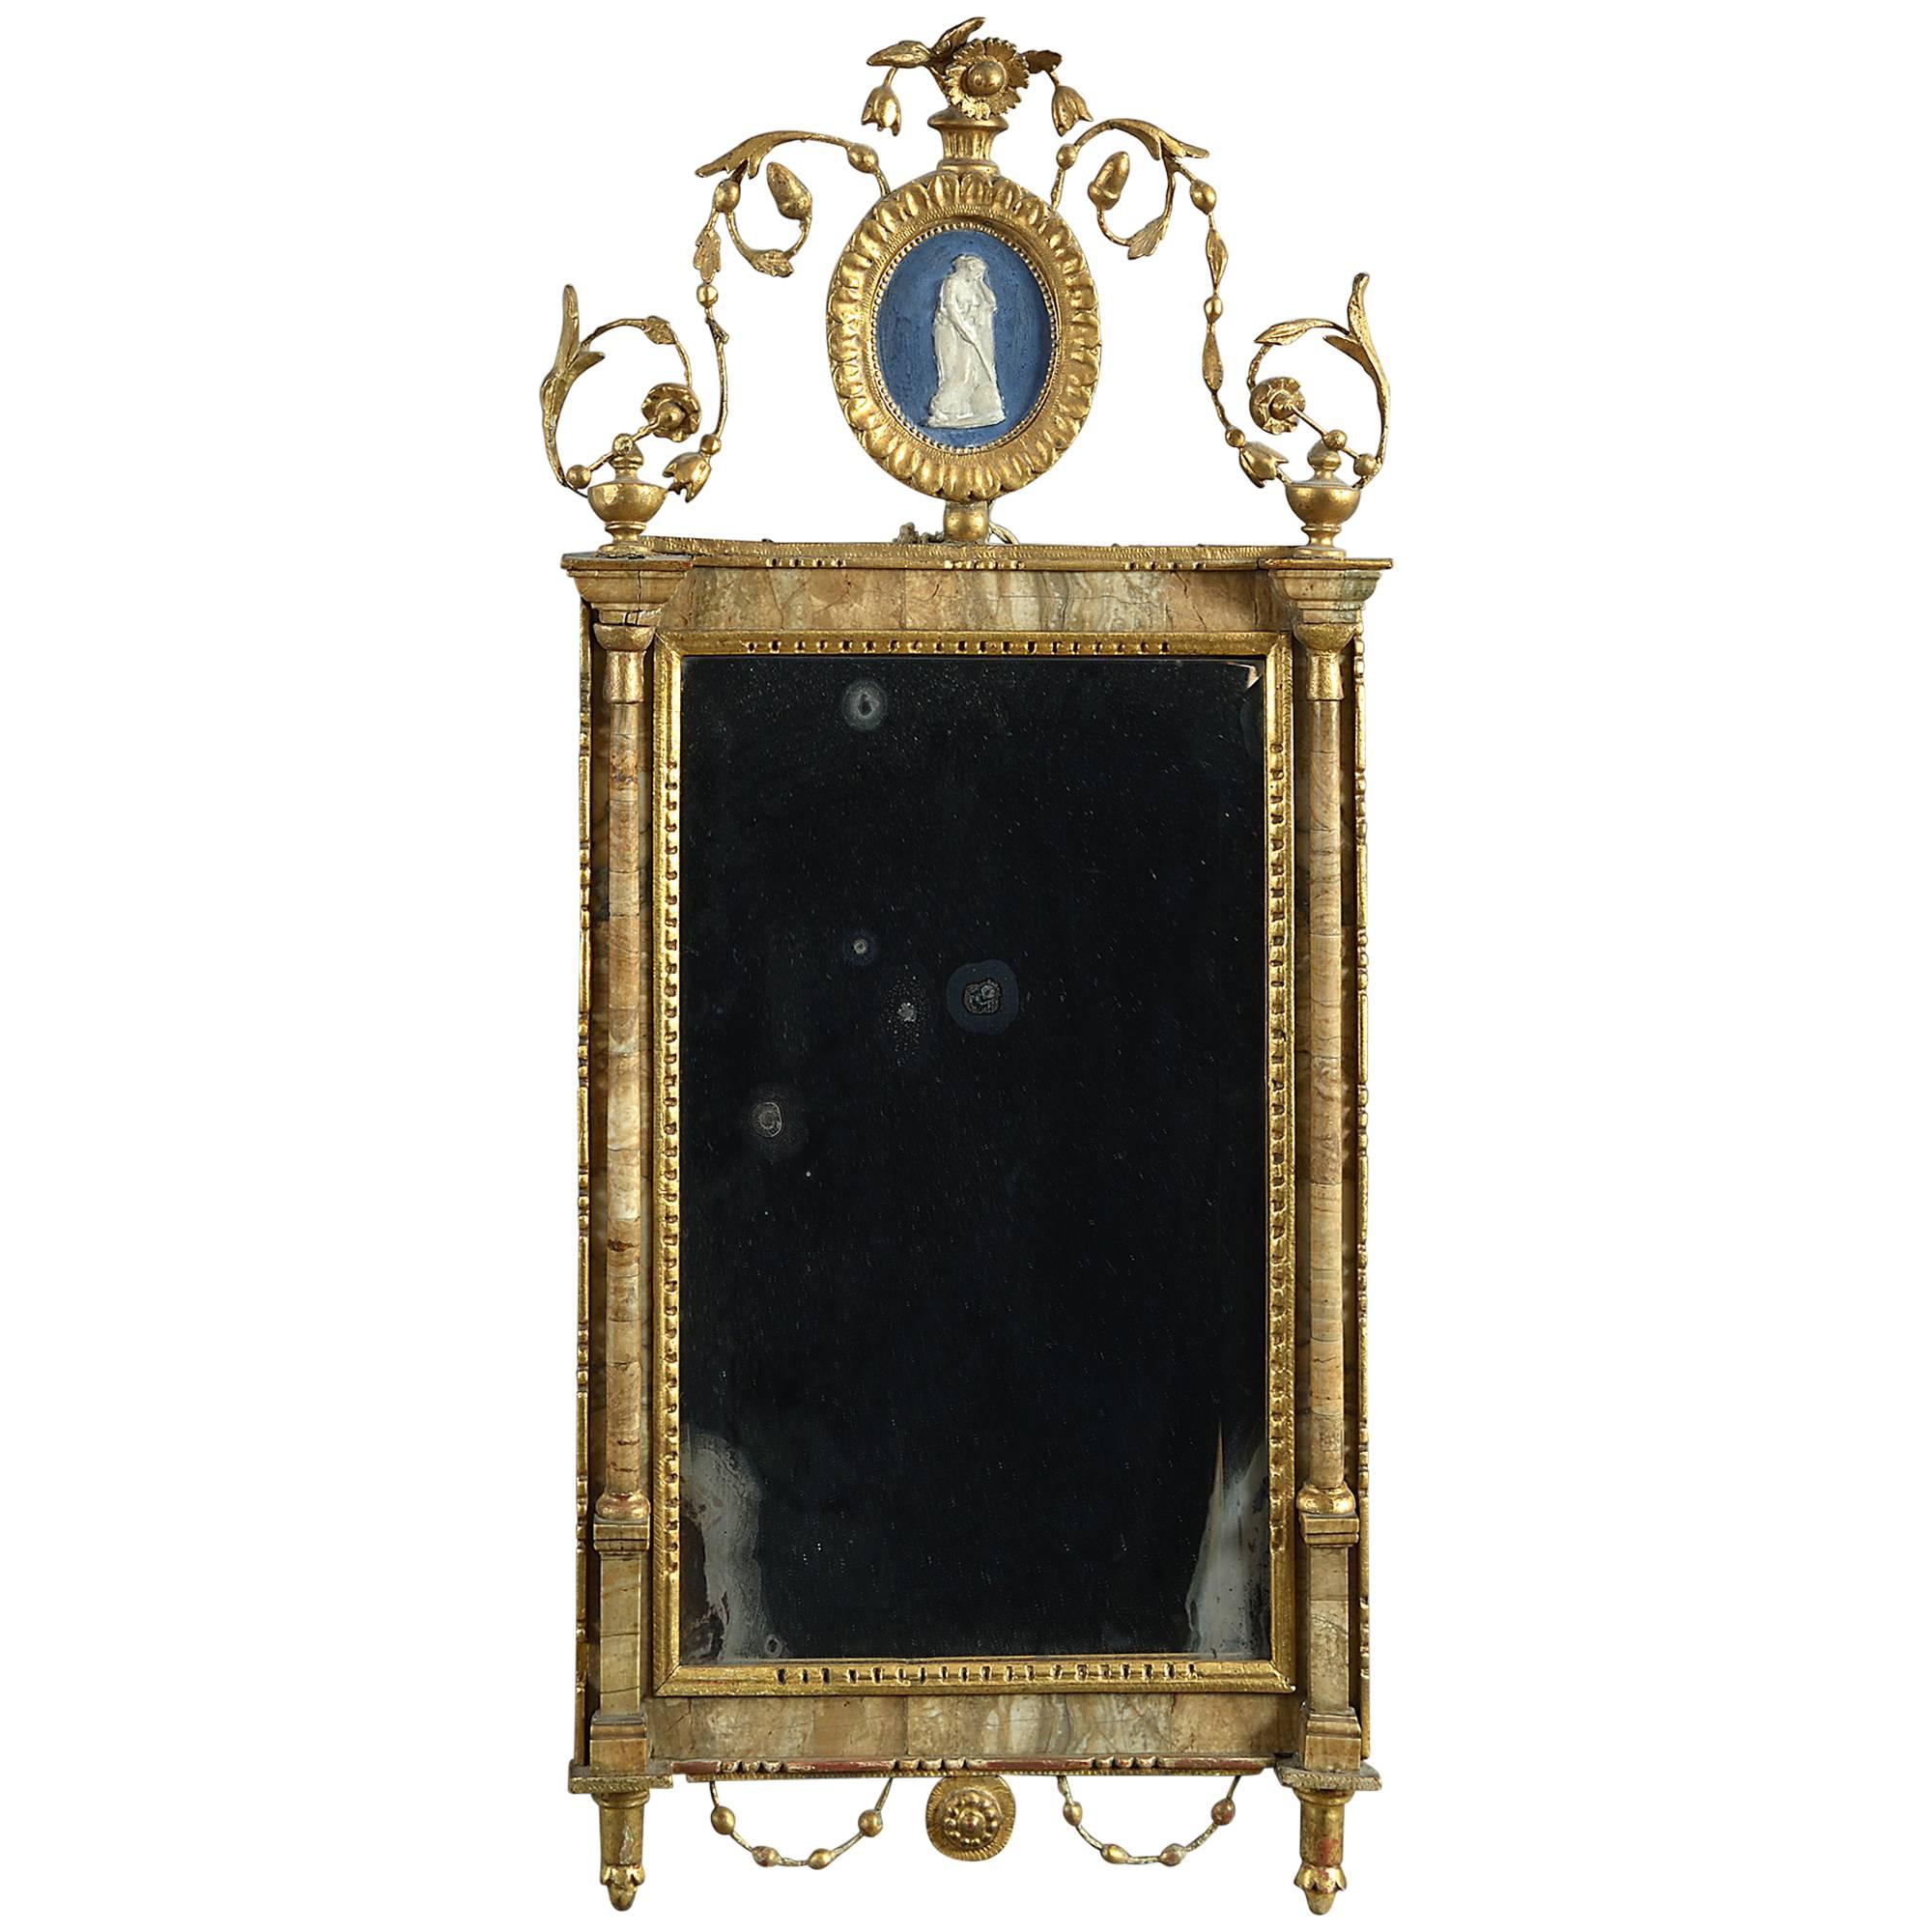 Late 18th Century Neoclassical Mirror